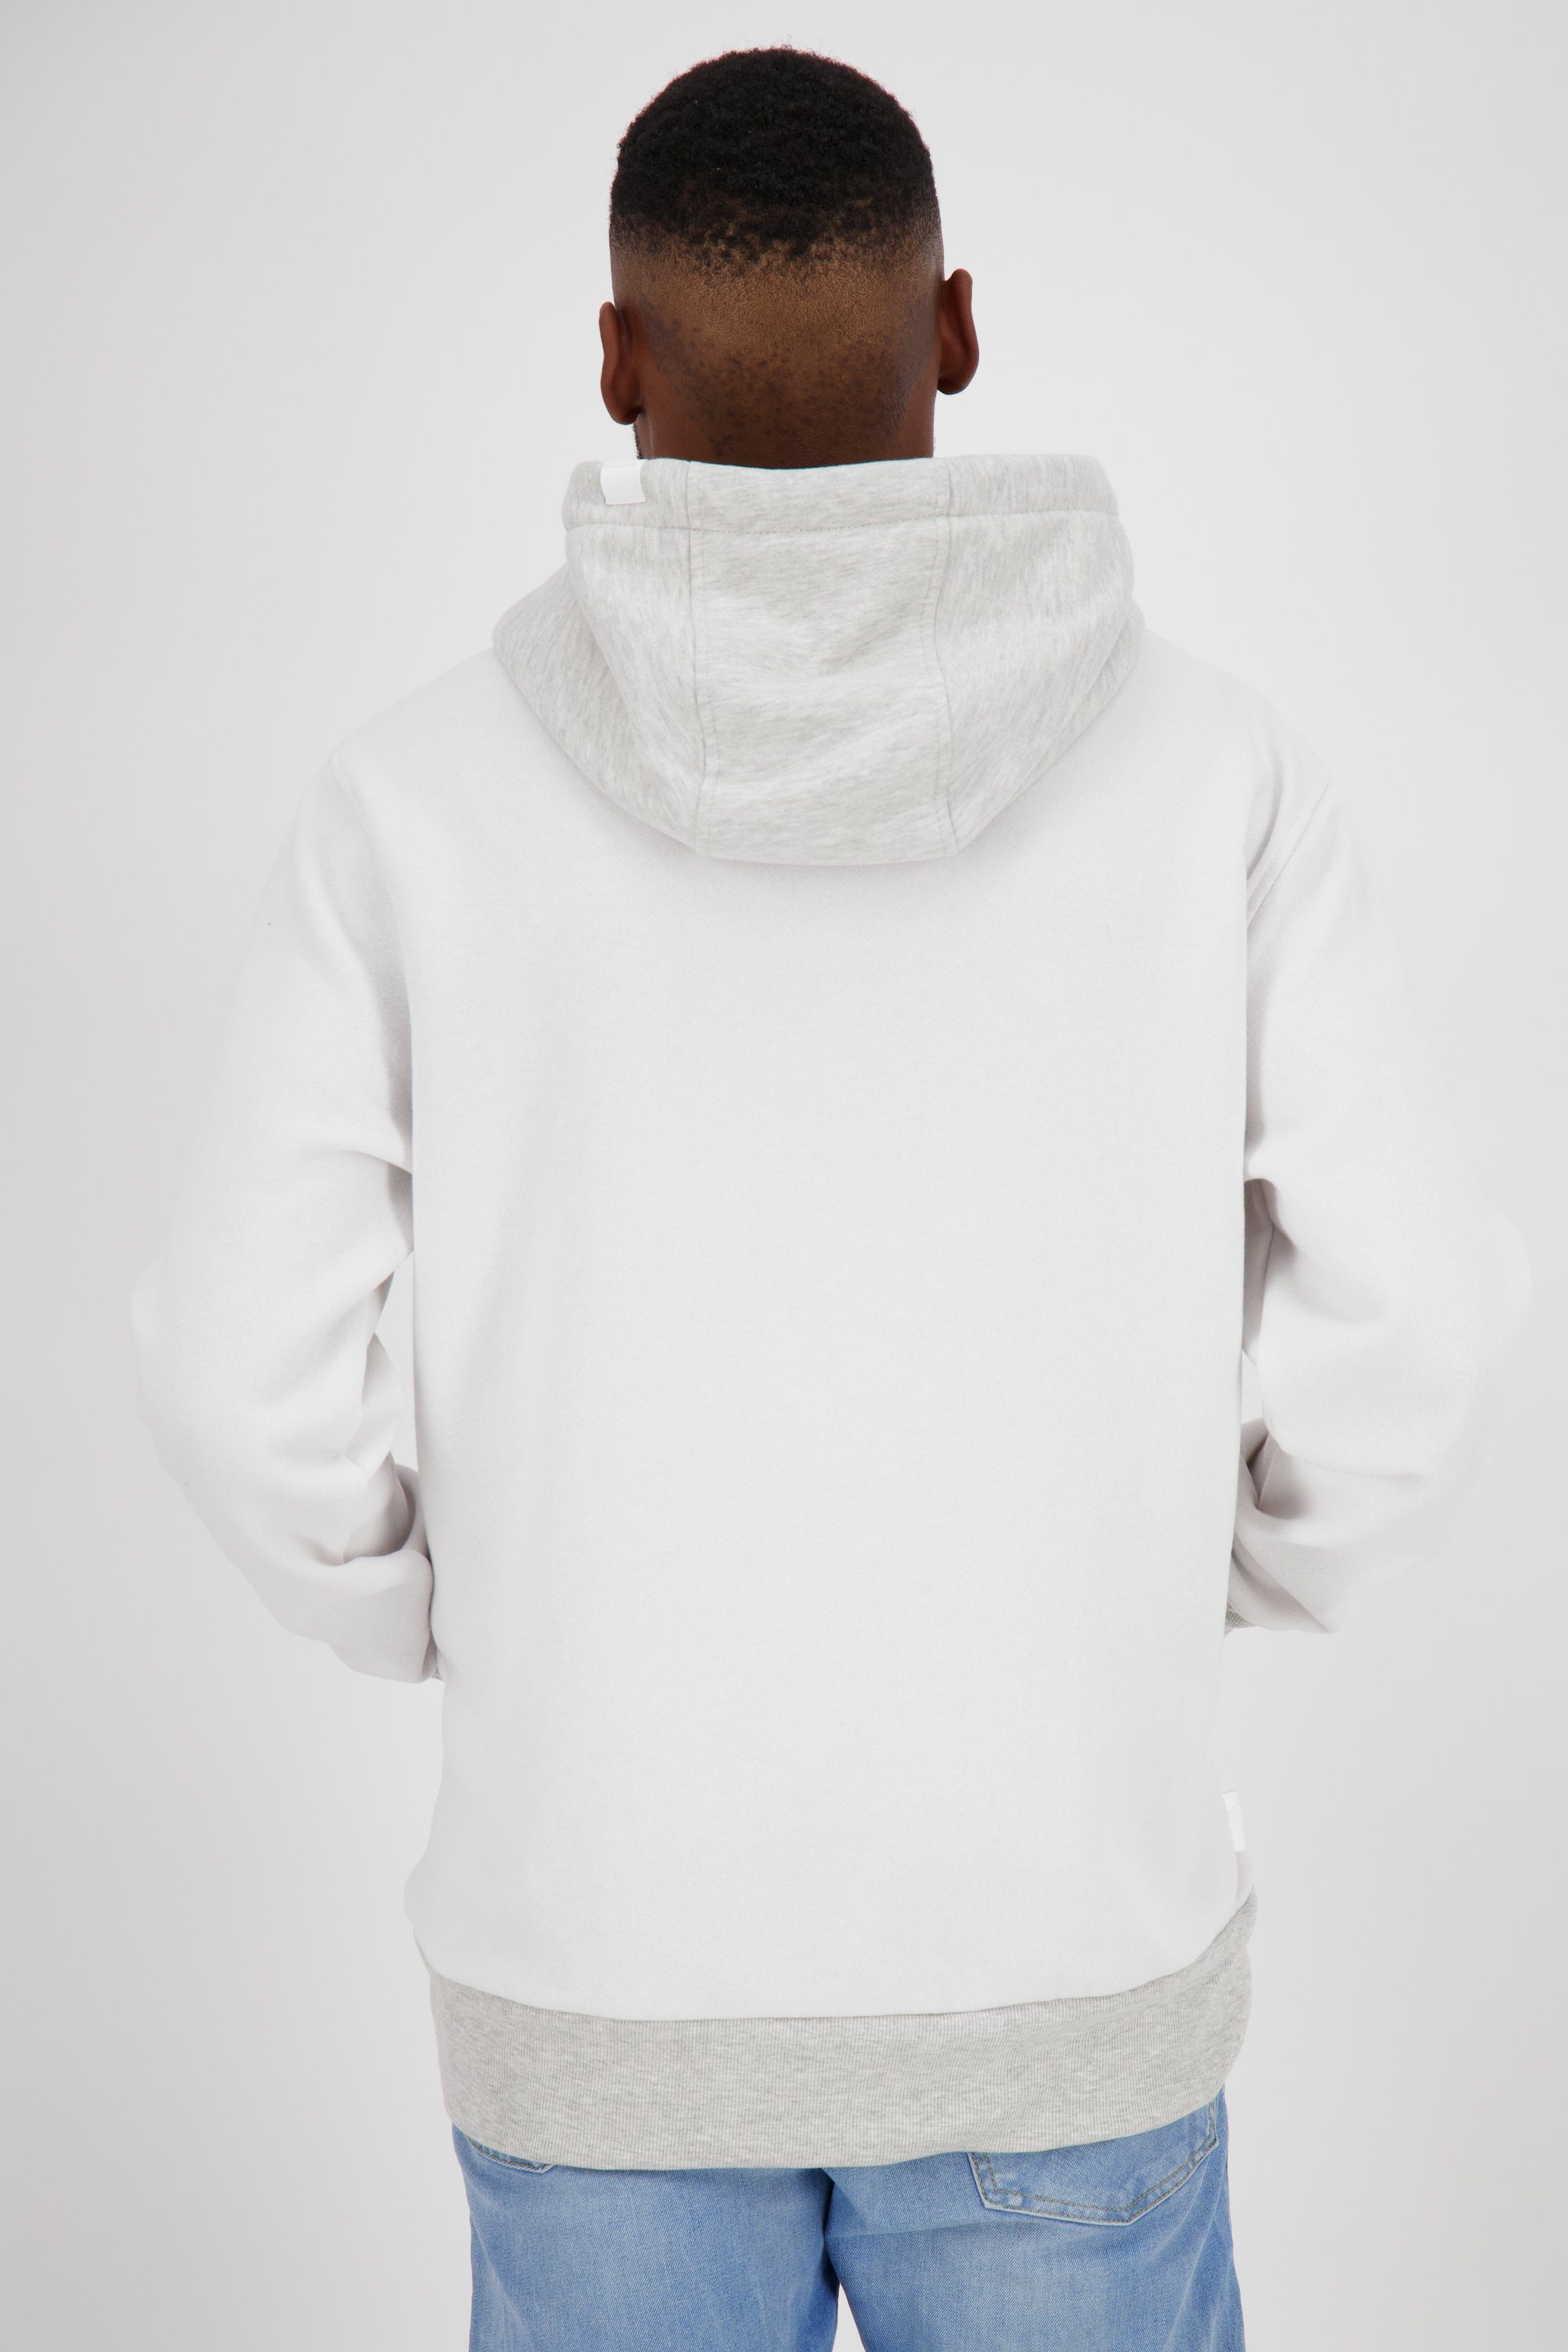 Alife & Kapuzensweatshirt white Sweatshirt Sweat Kickin MatteoAK Herren Kapuzensweatshirt,